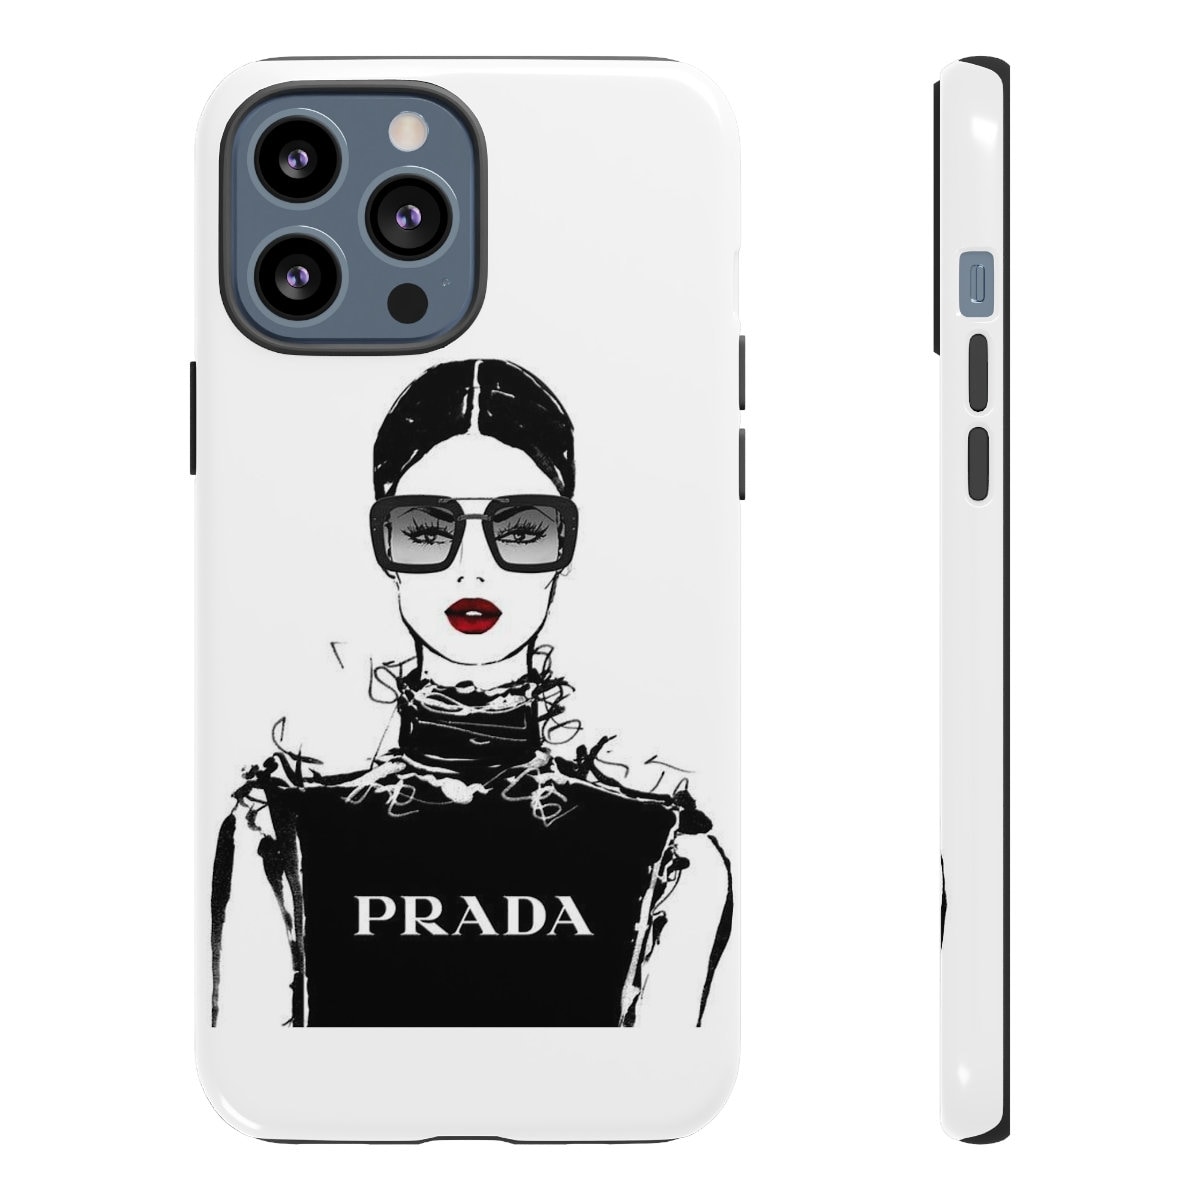 Prada Phone Case - Etsy